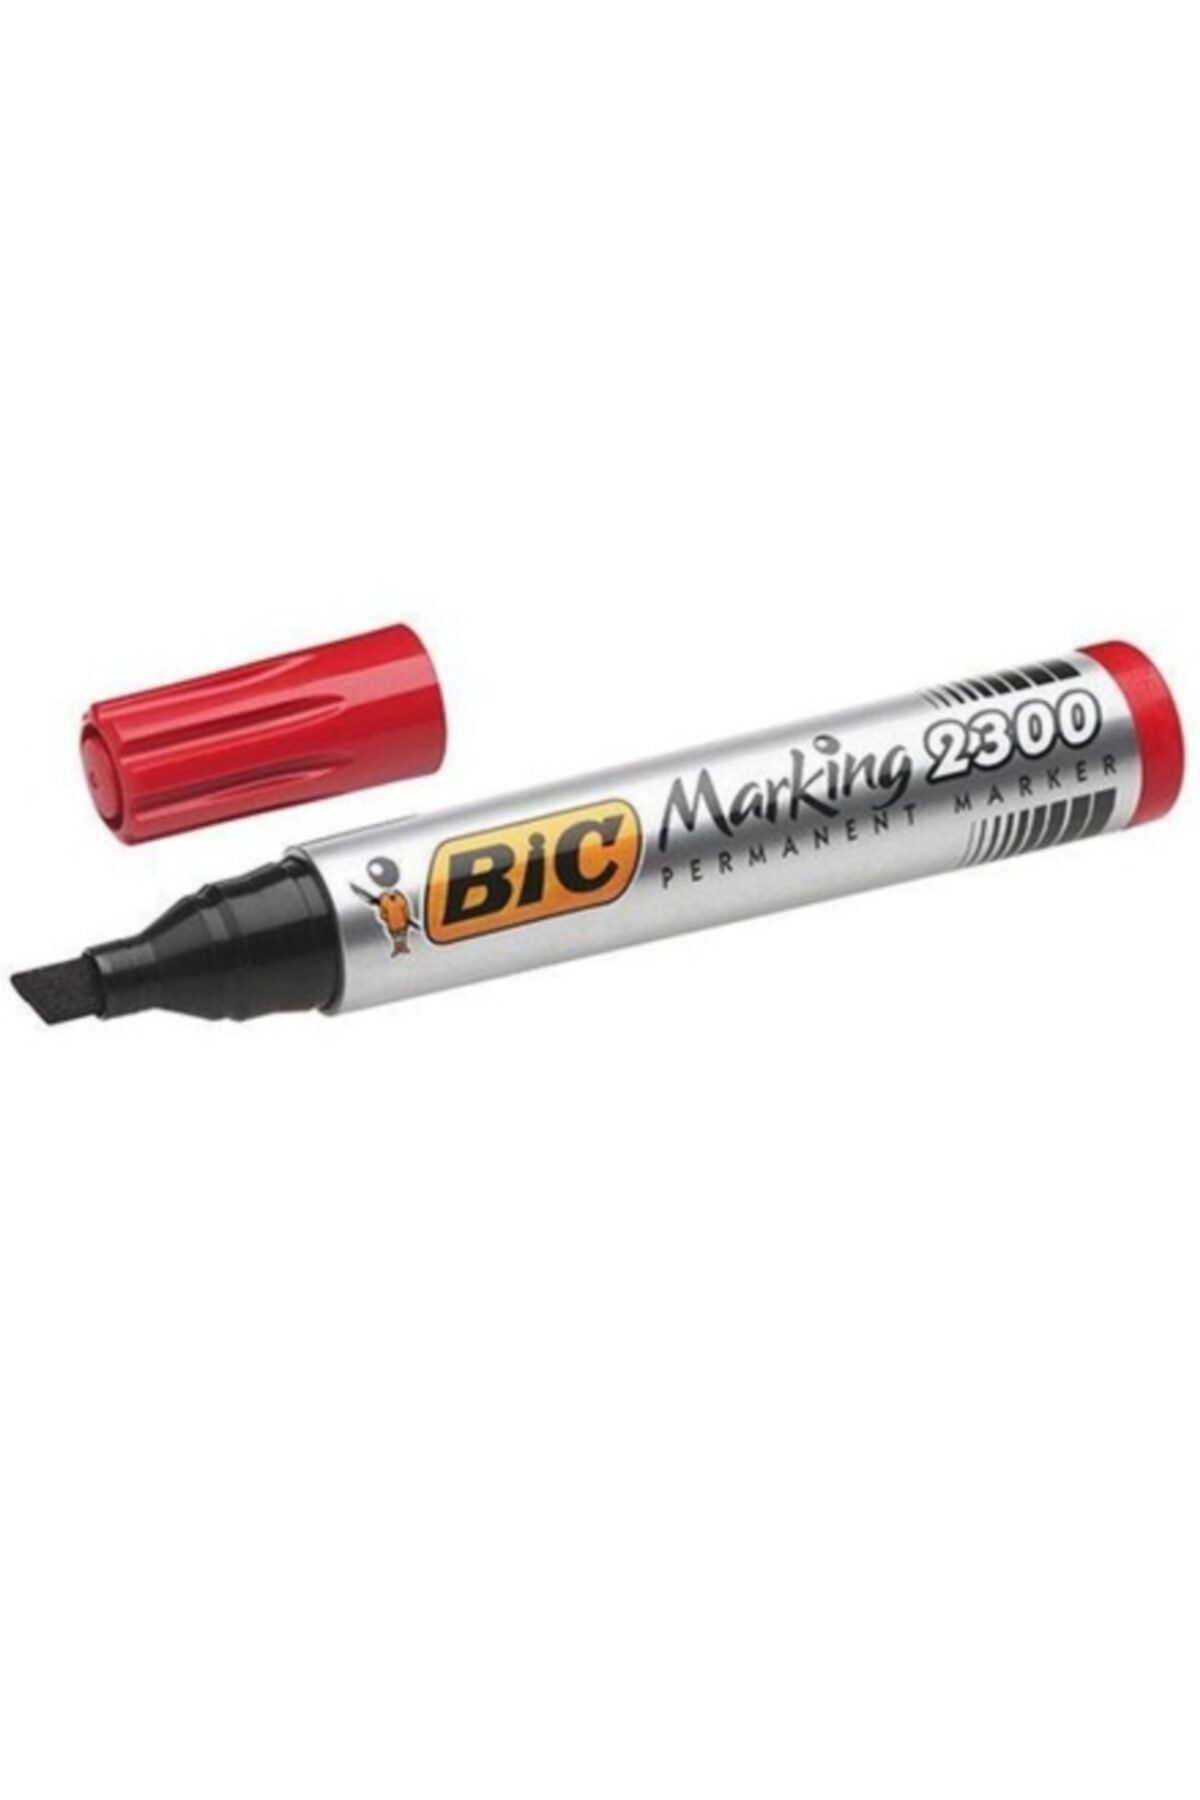 Bic Bıc Marker Marking 2300 Permanent - Ecolutions – Kırmızı